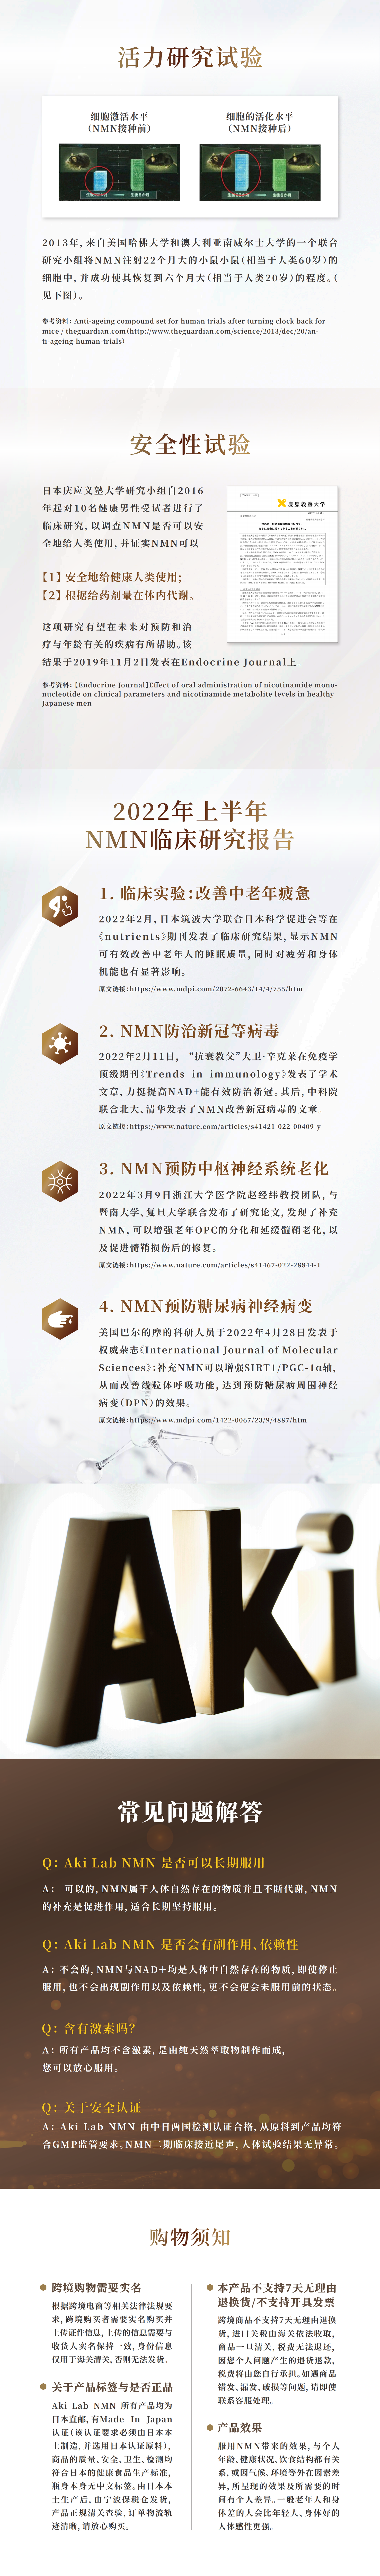 NMN15000电商宣传资料(1)_02 - 副本.png